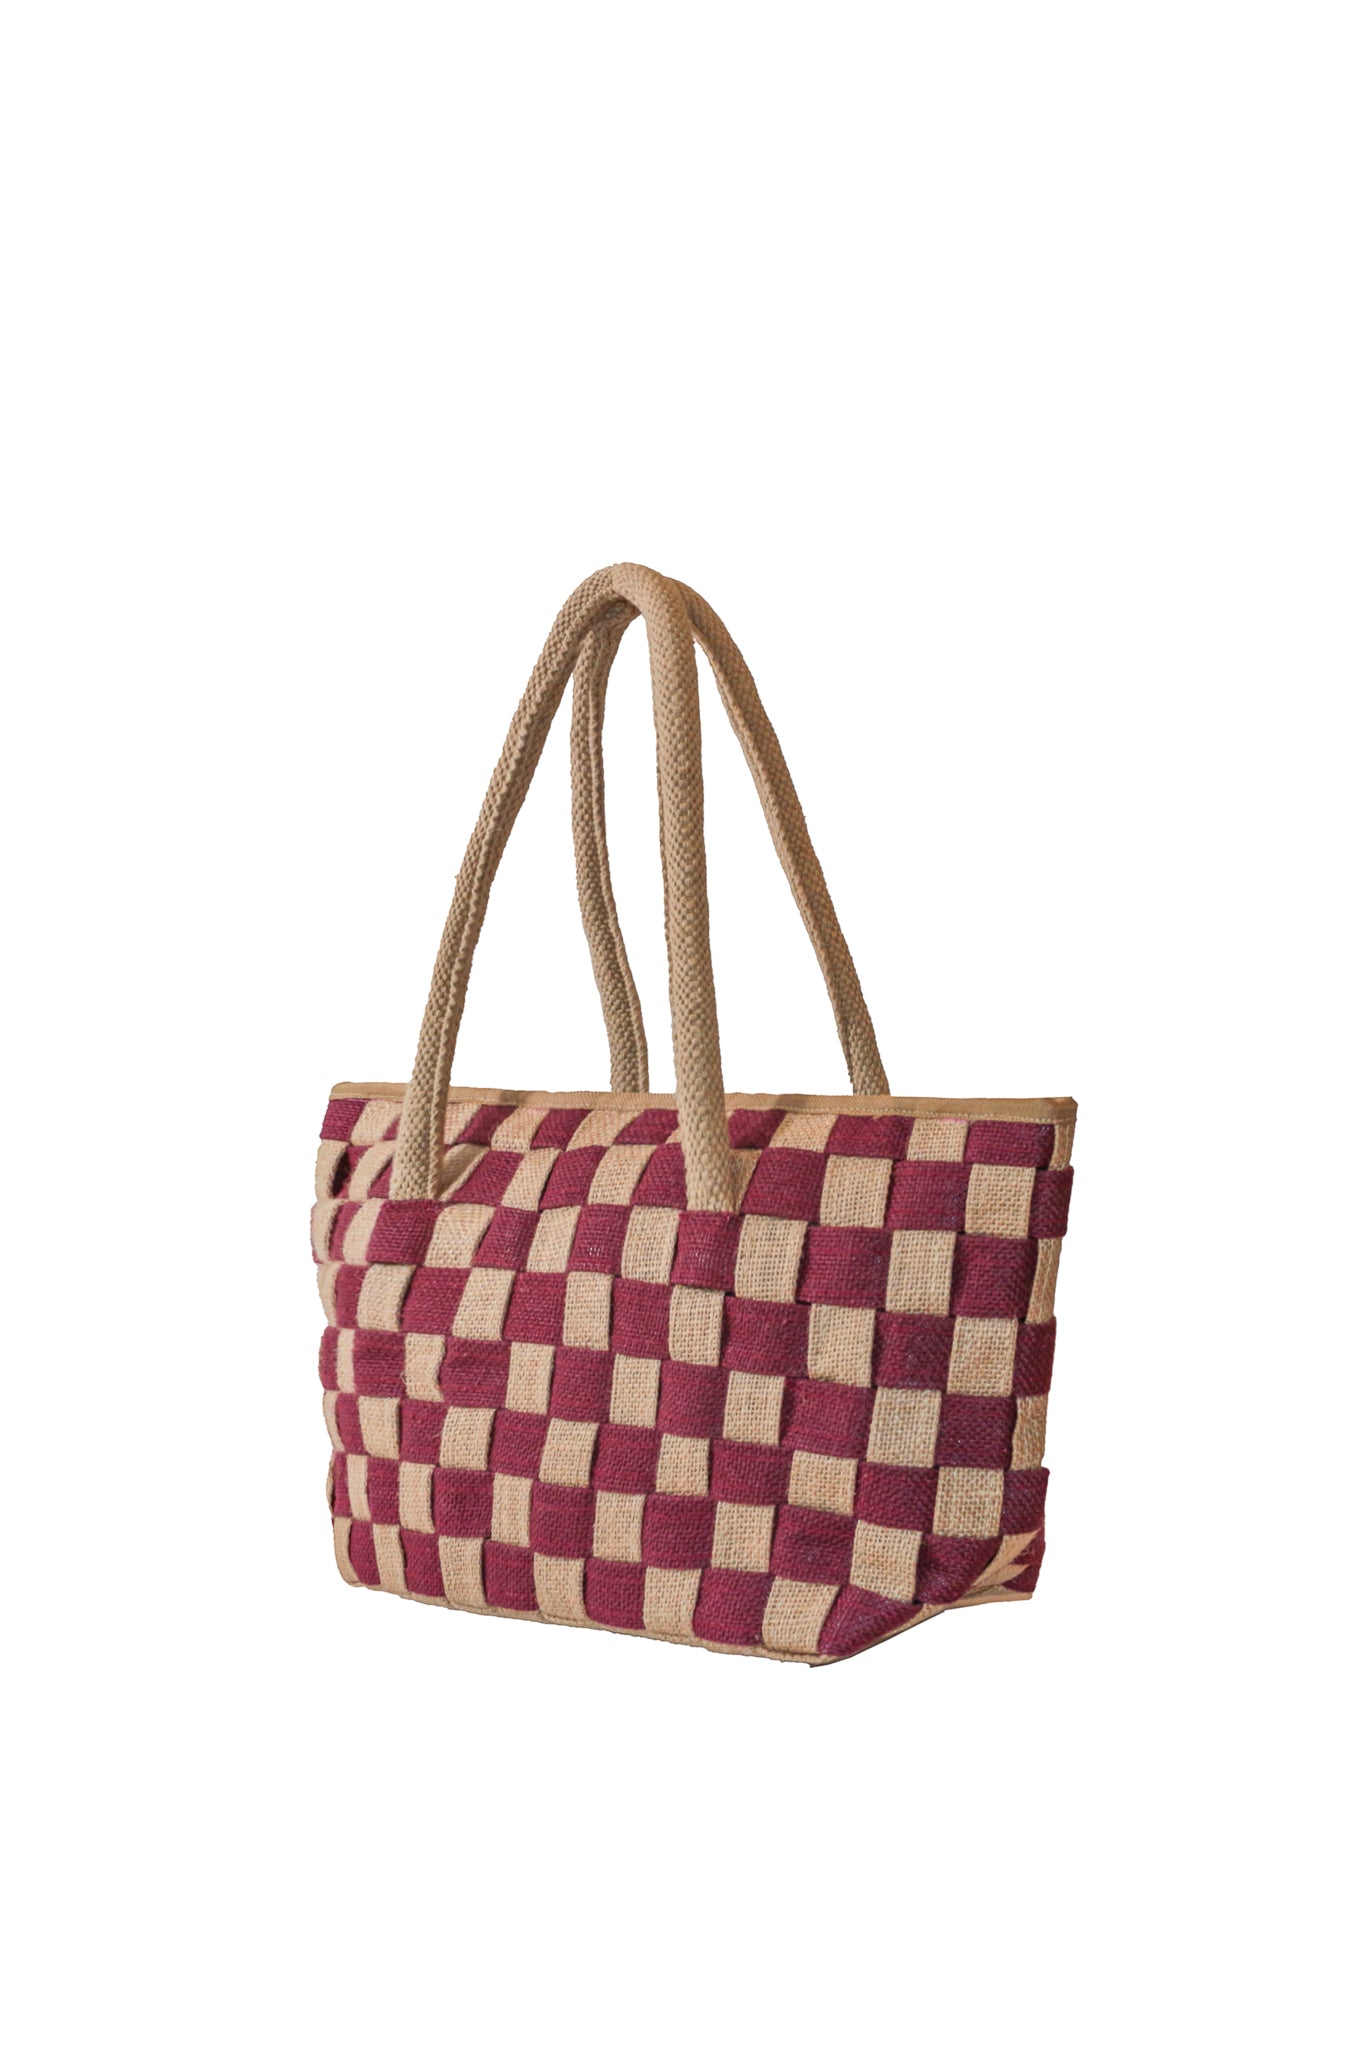 Classic Checkered Handwoven Vegan Jute Handbag in Burgundy